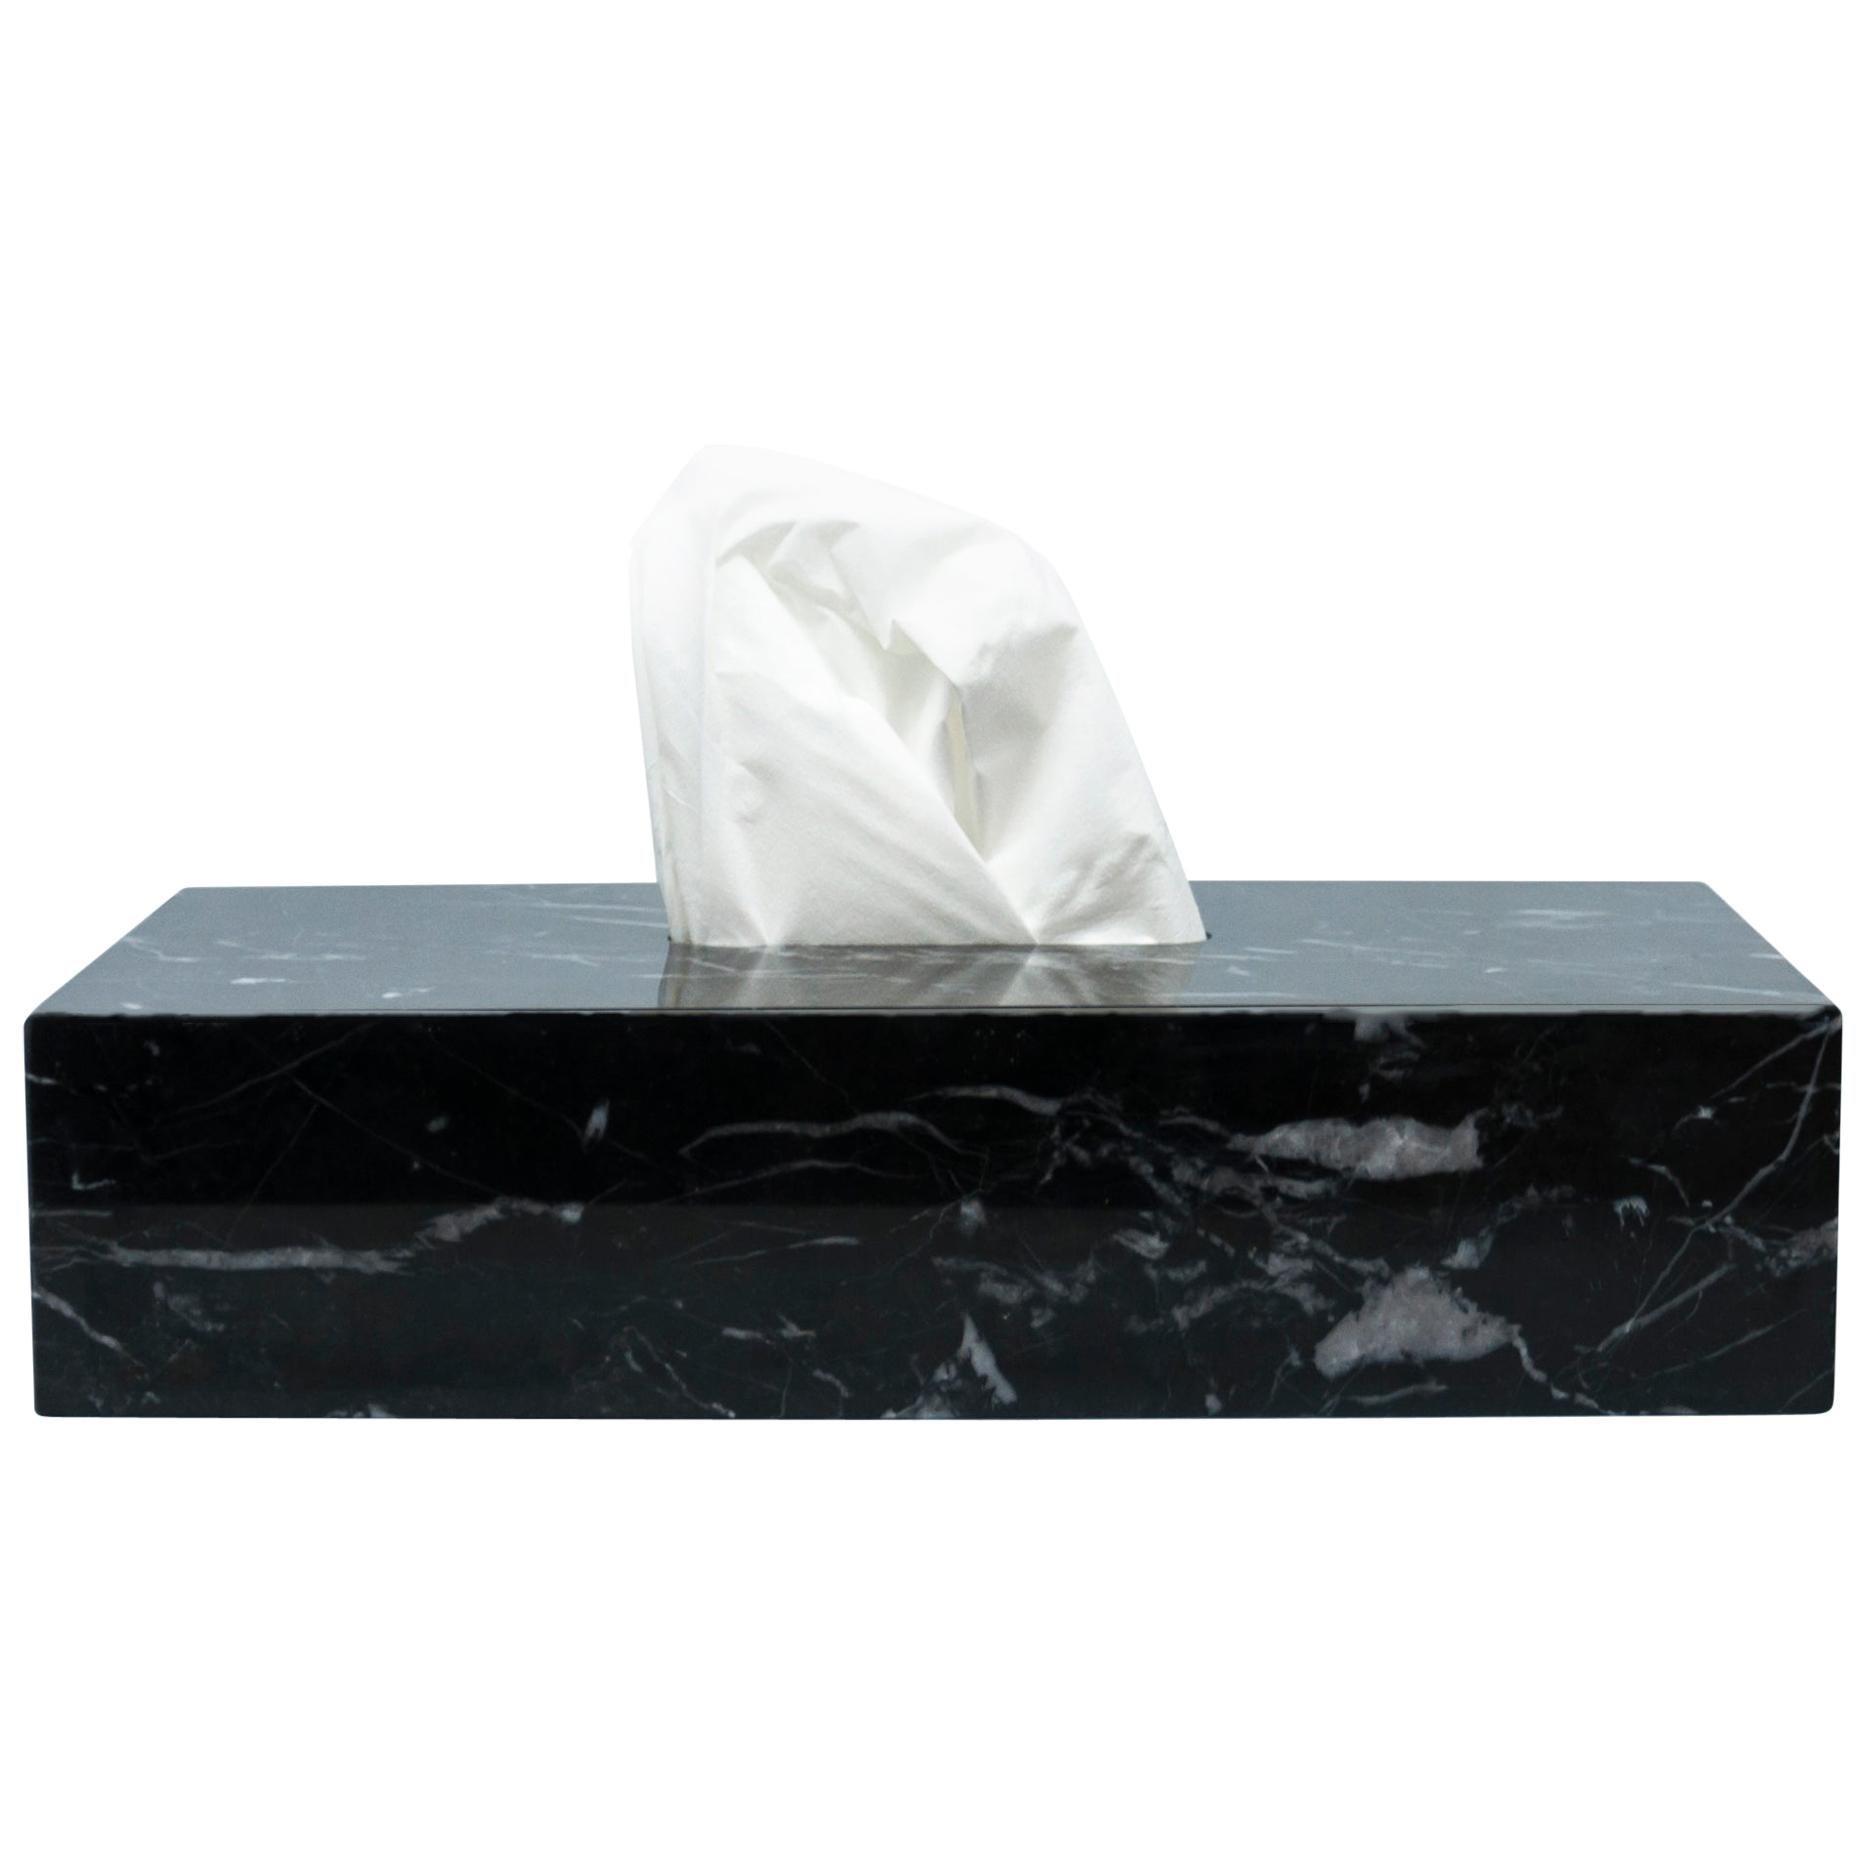 Handmade Rectangular Tissues Cover Box in Black Marquina Marble